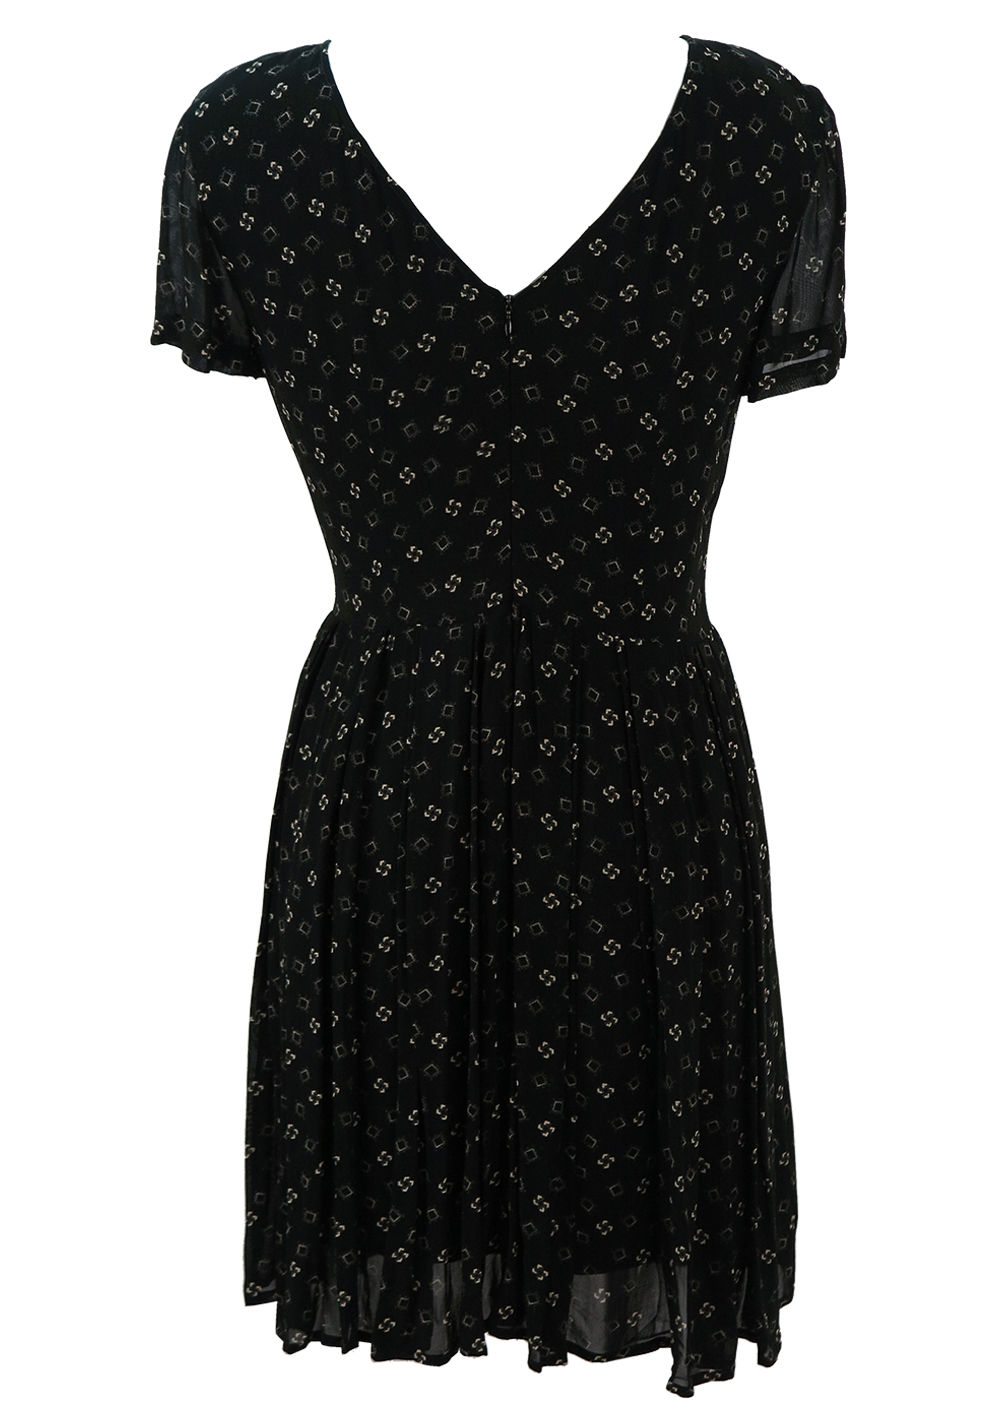 Black Semi Sheer Mini Dress with Cream Square Pattern - M | Reign Vintage